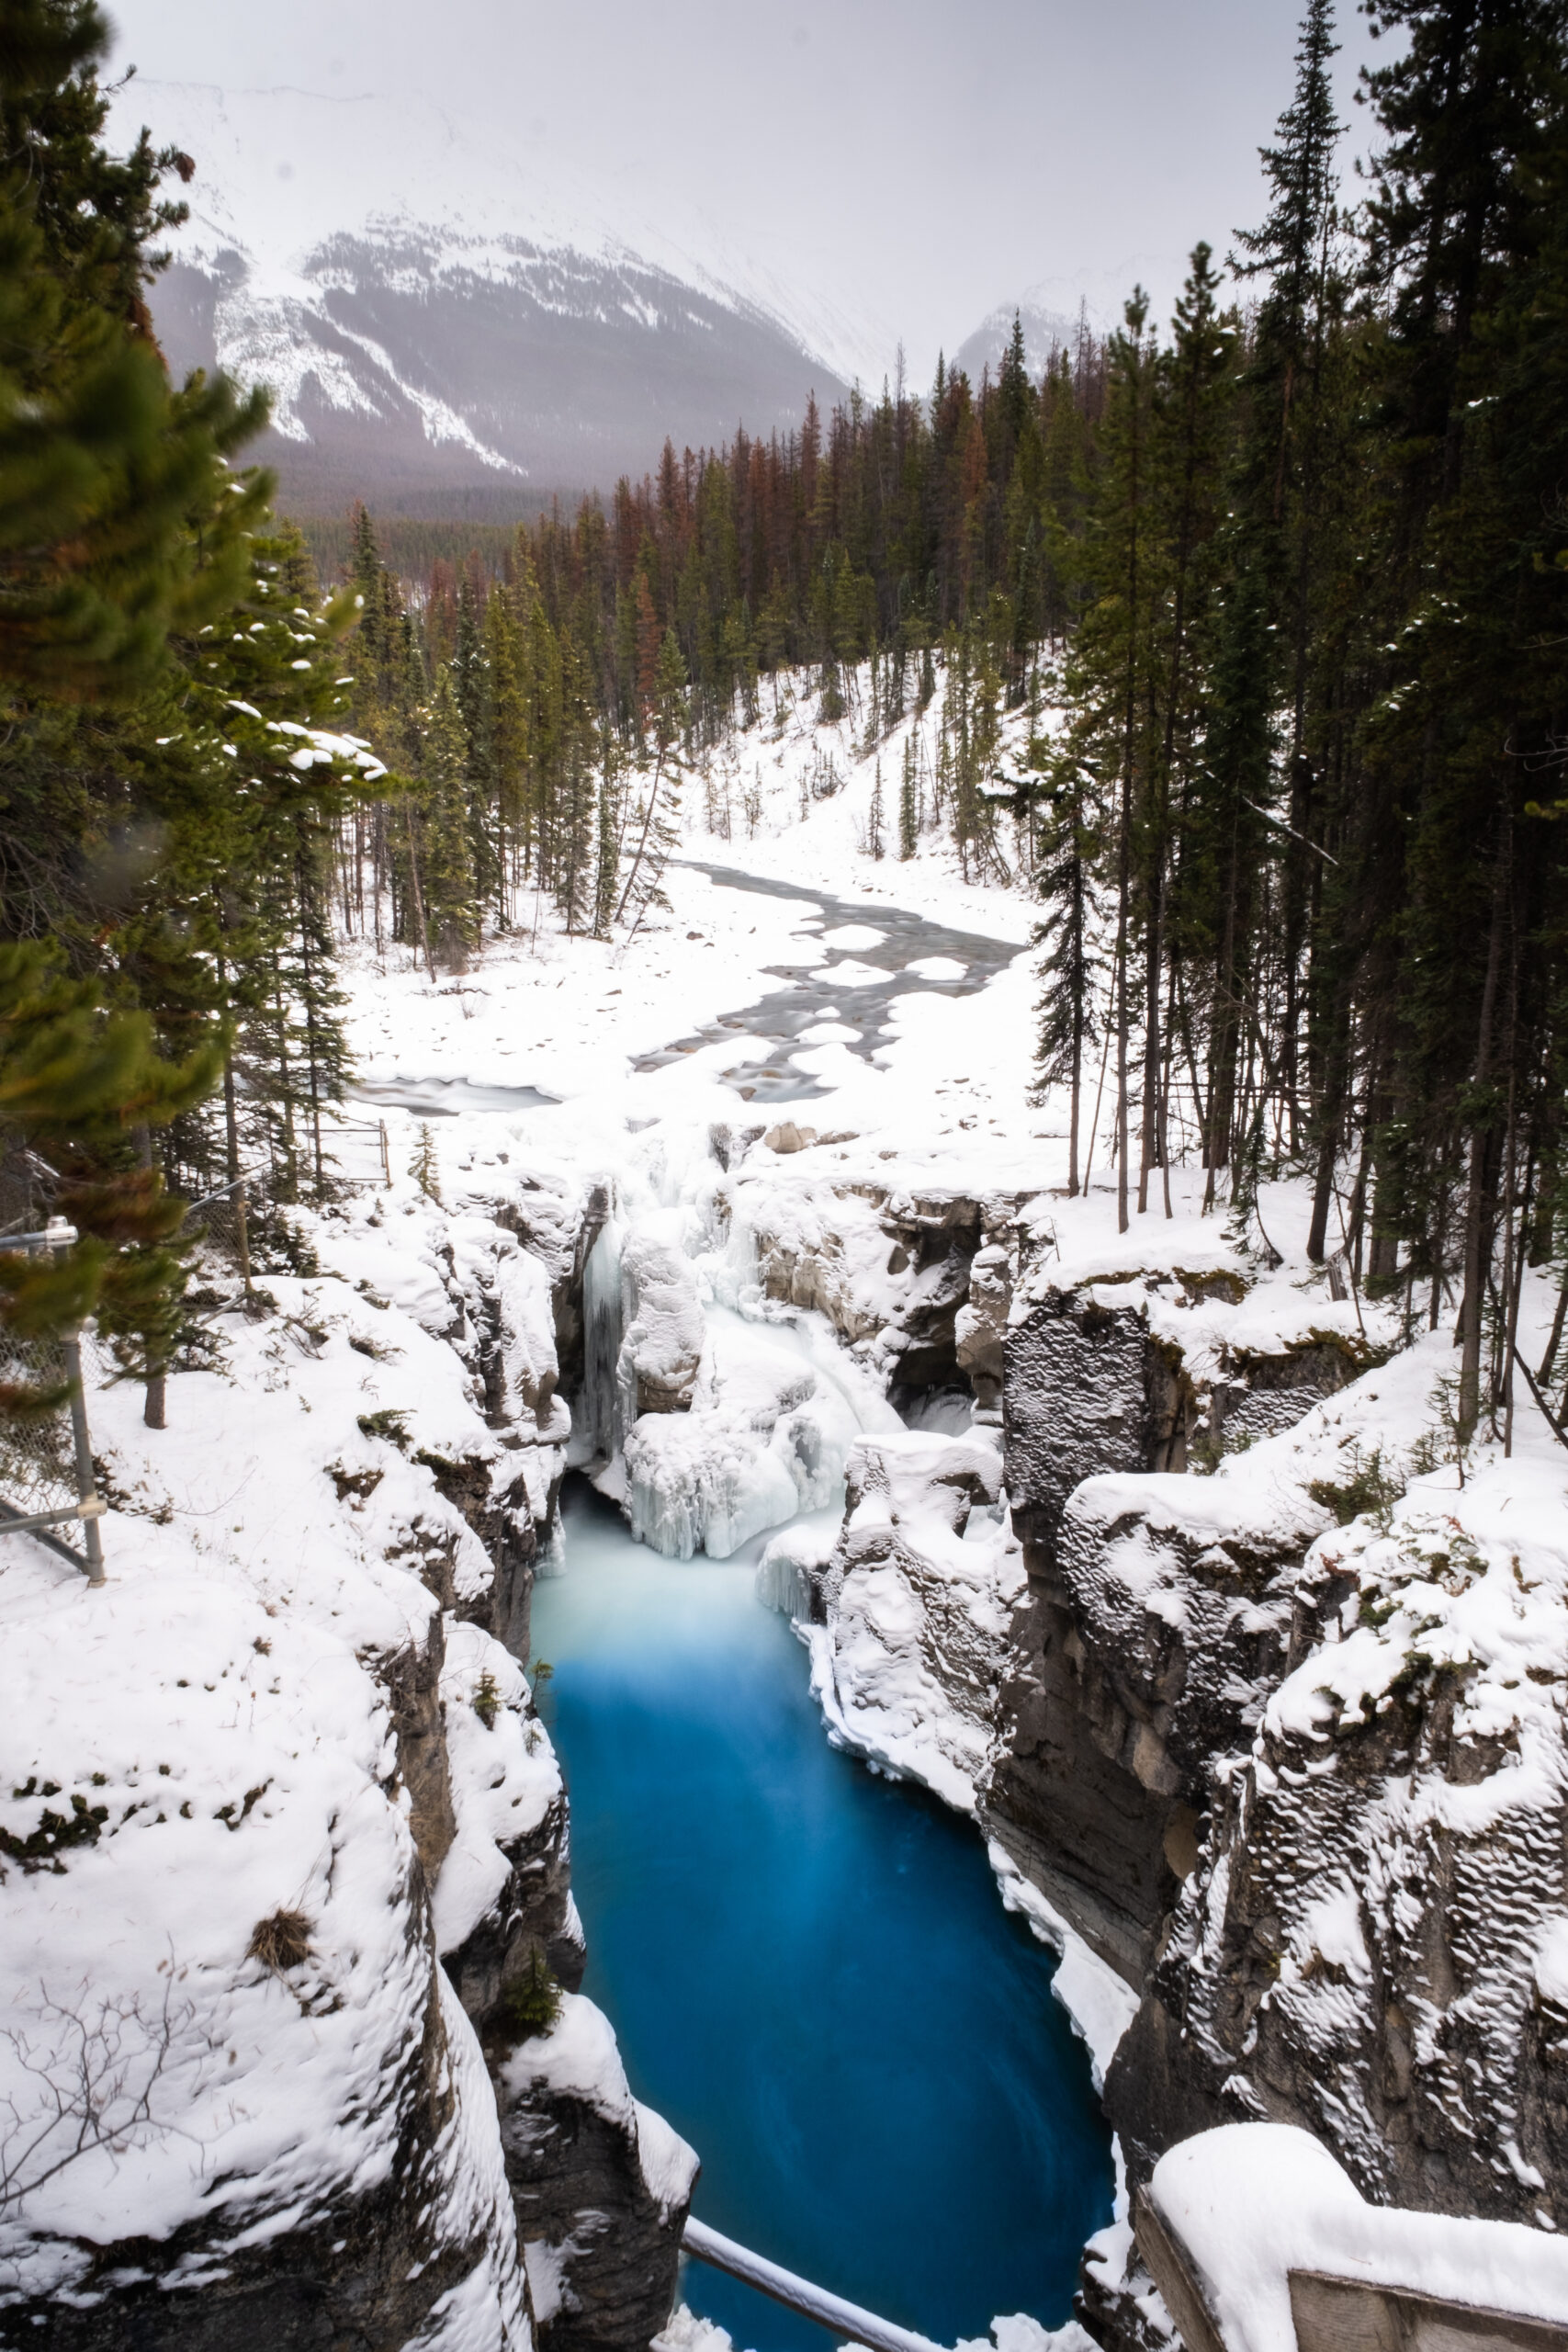 Jasper in winter - sunwapta falls in winter